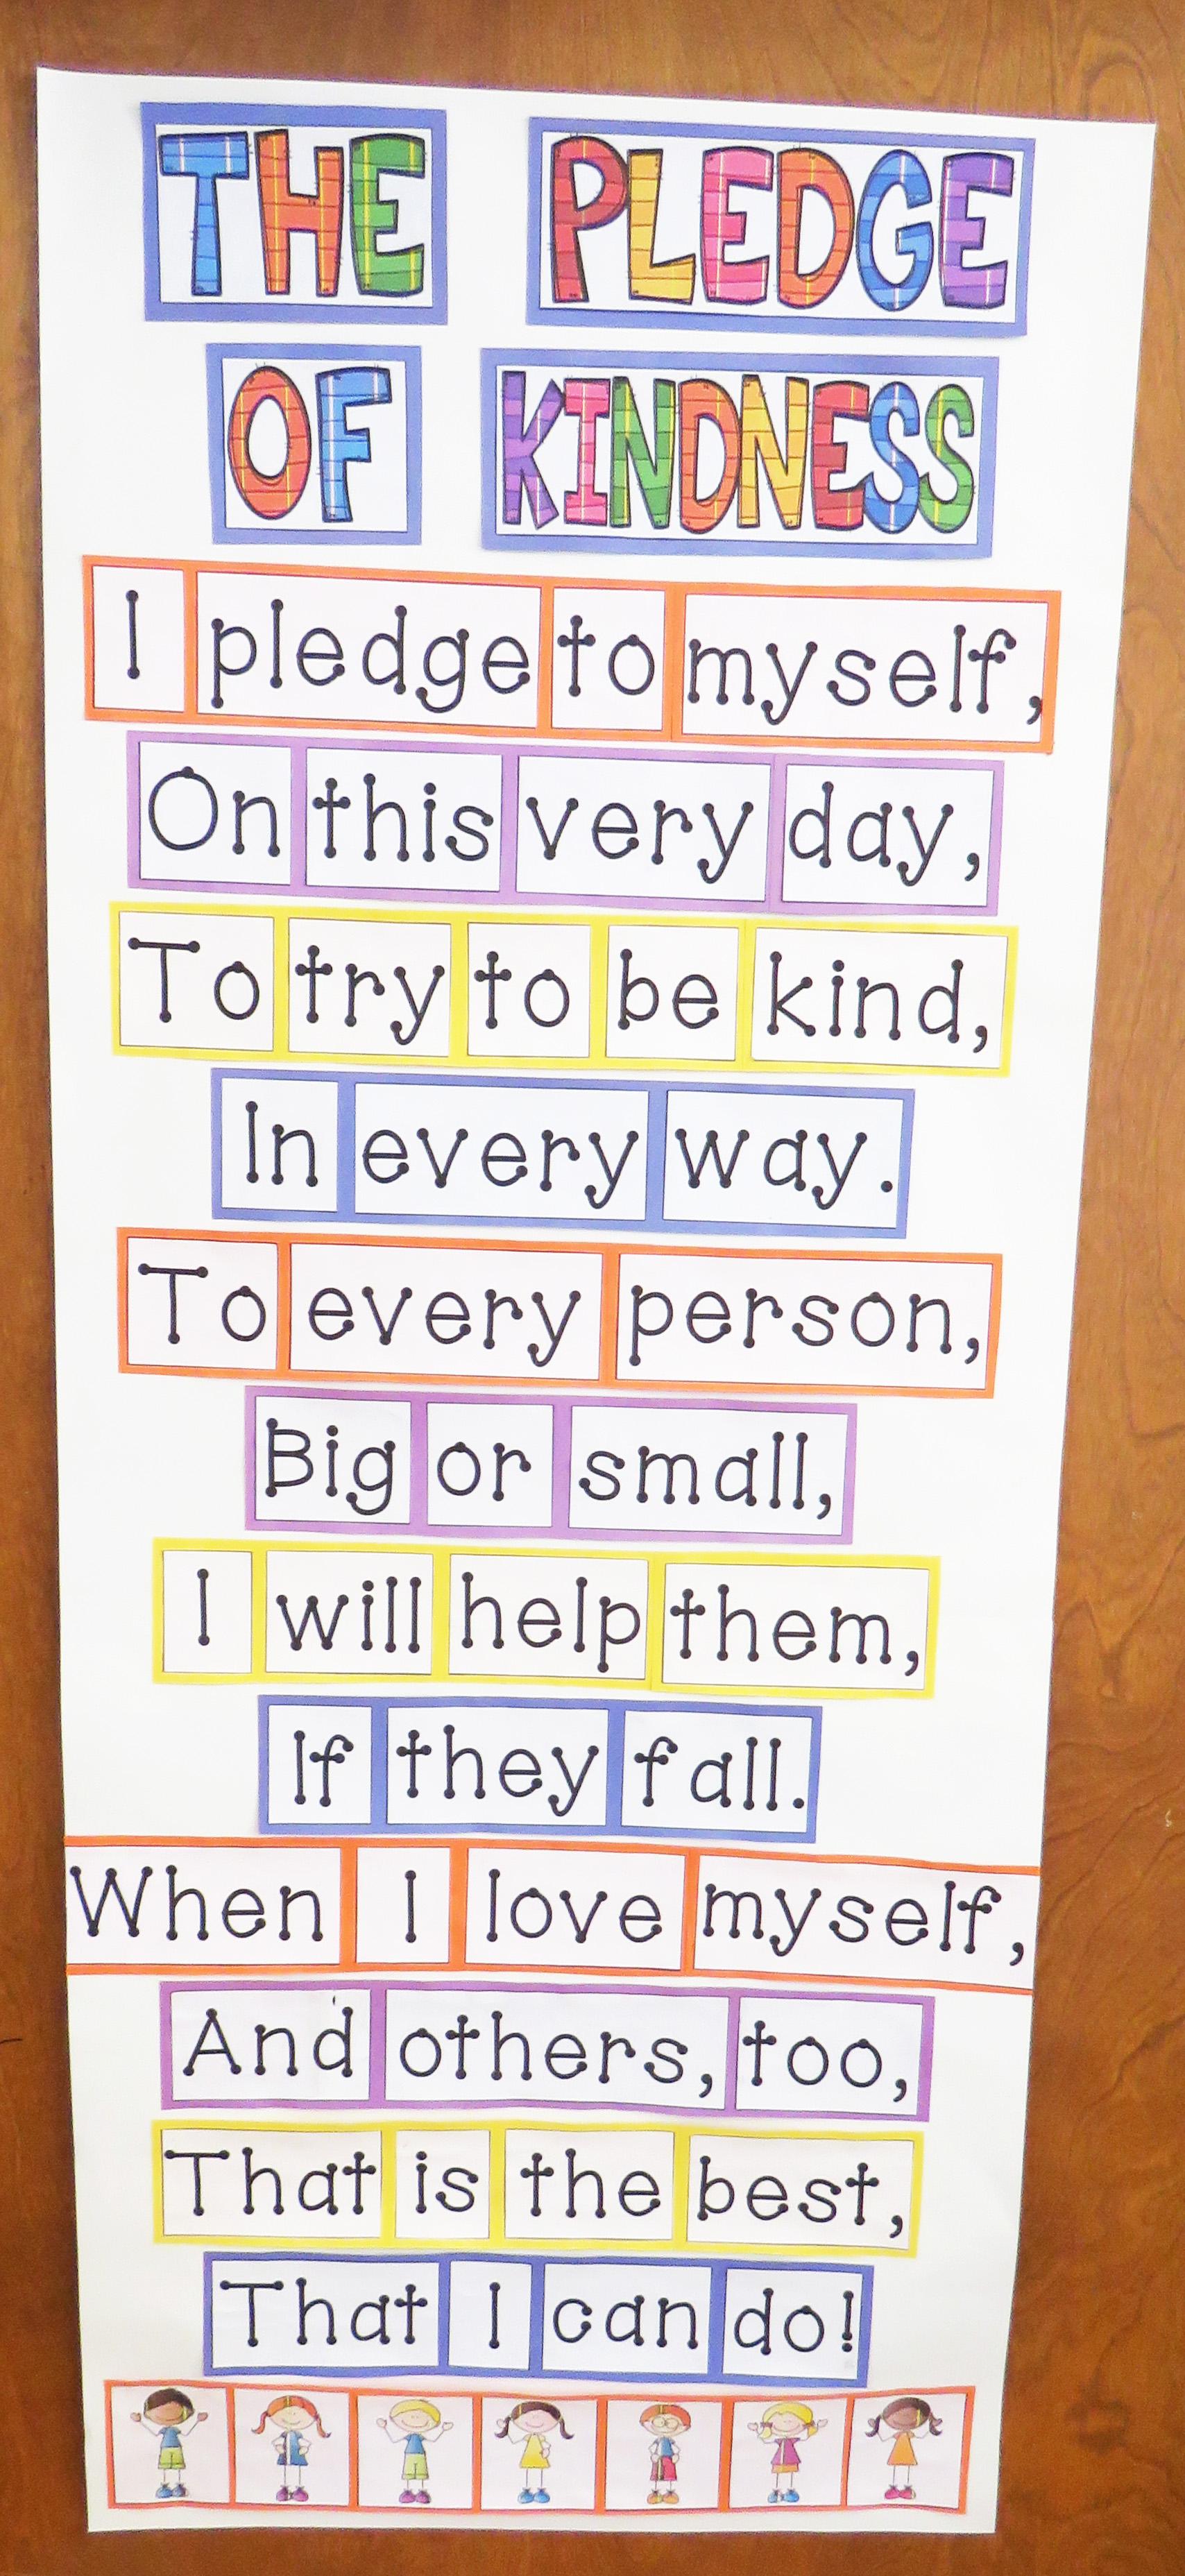 A decorative design of The Pledge of Kindness inside an Adams School classroom